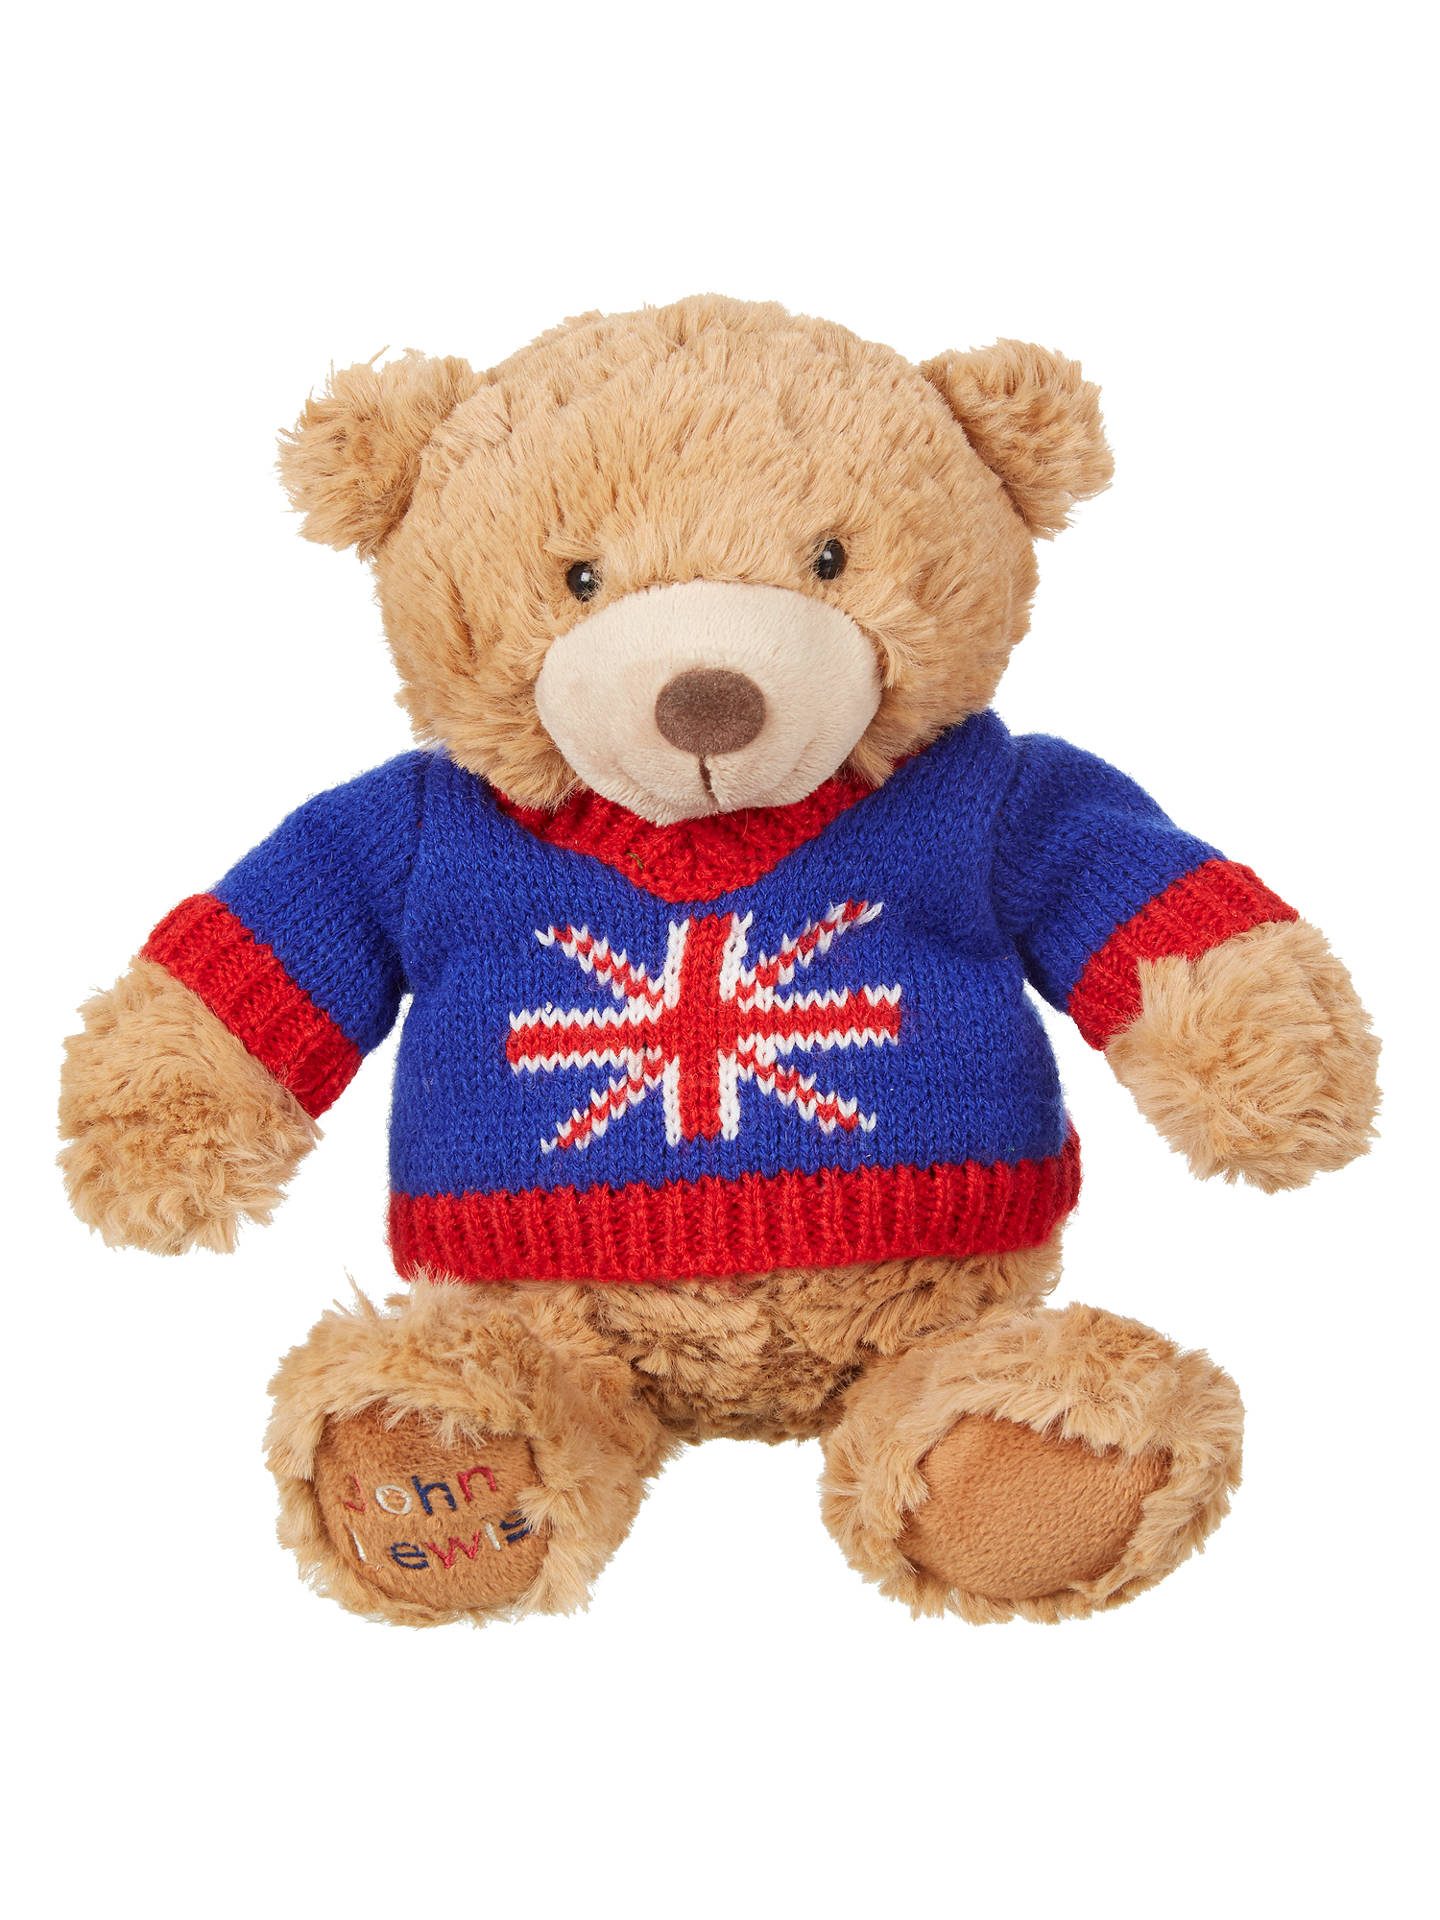 London Souvenirs Teddy Bear